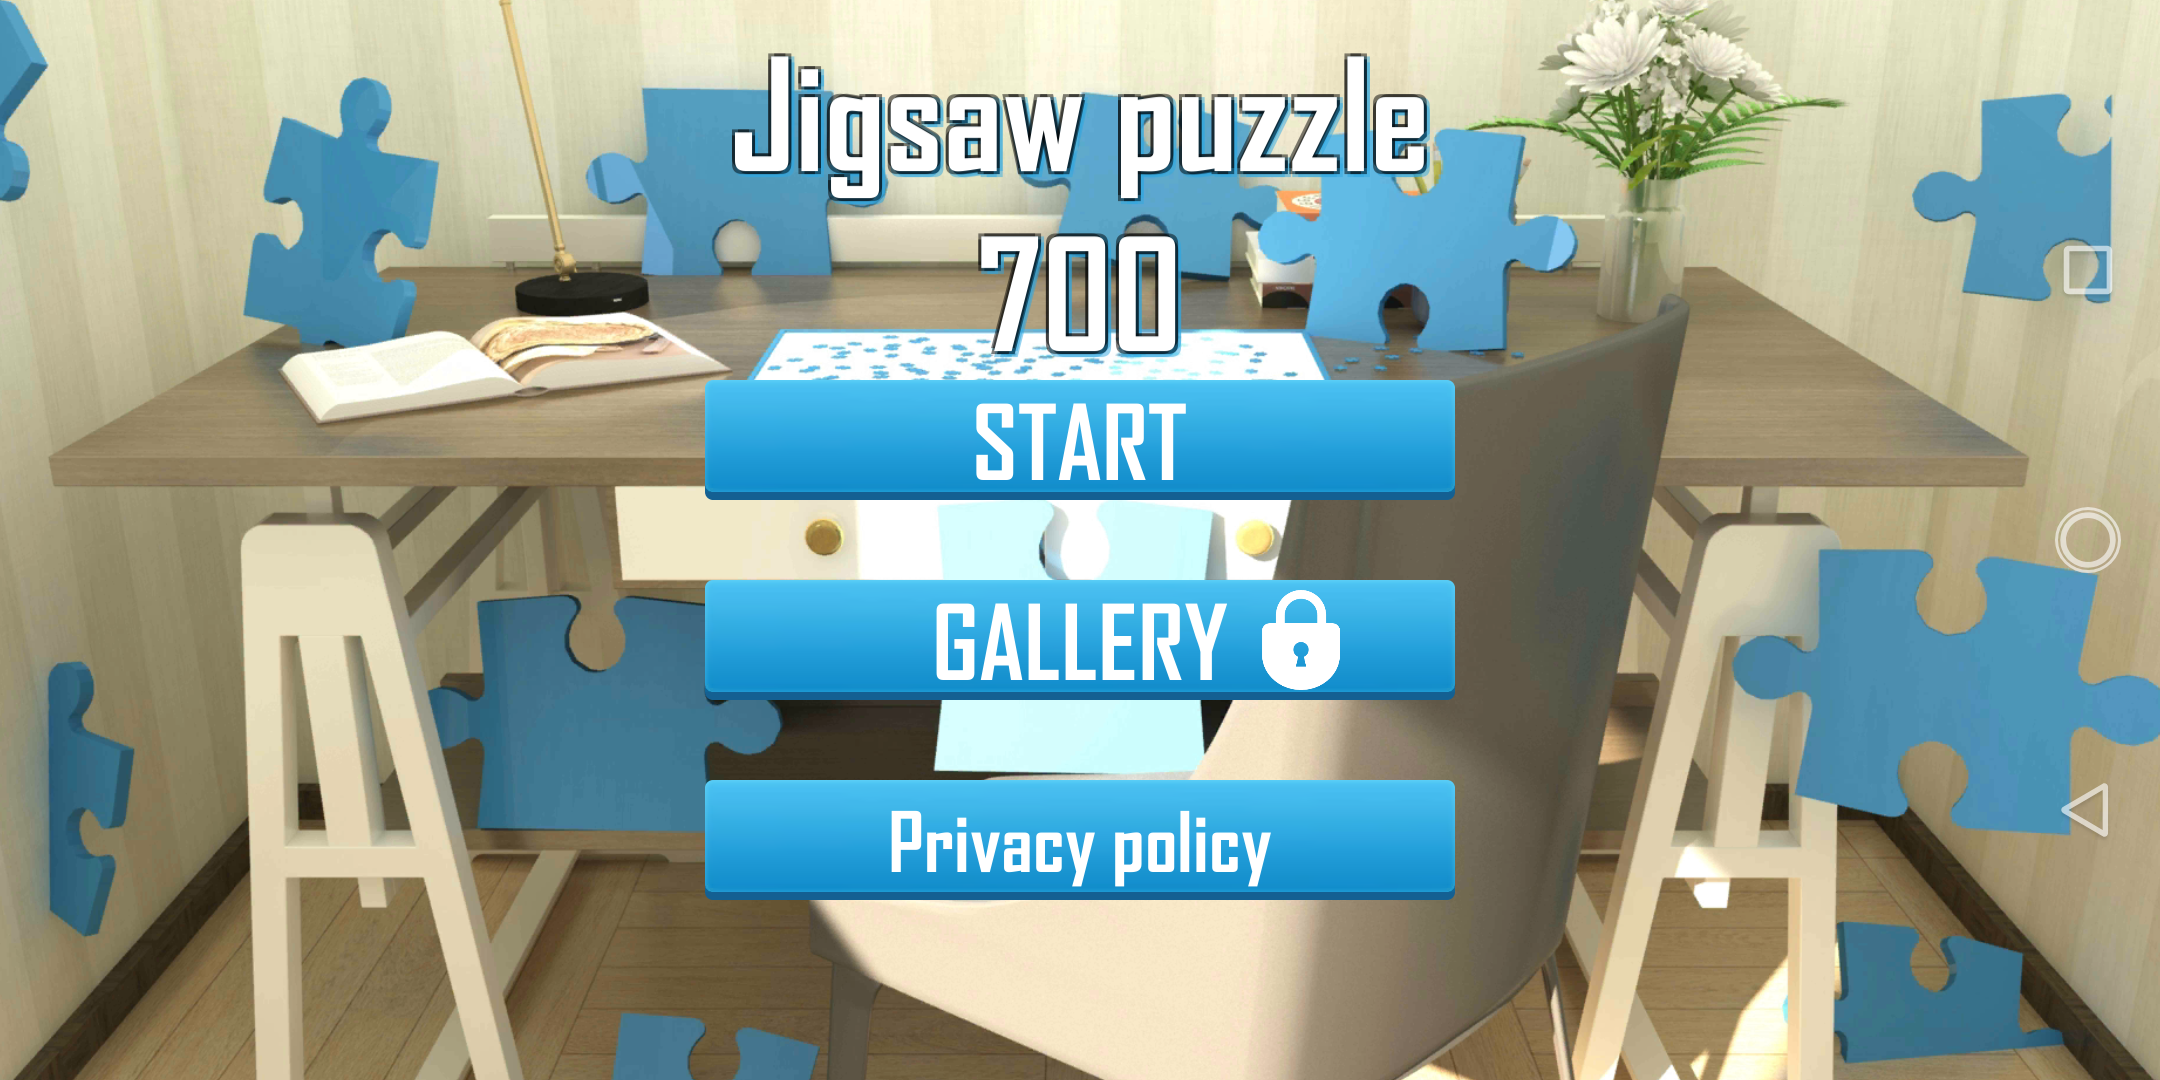 Screenshot 1 of 직소 퍼즐 -700 피스 - 1.03